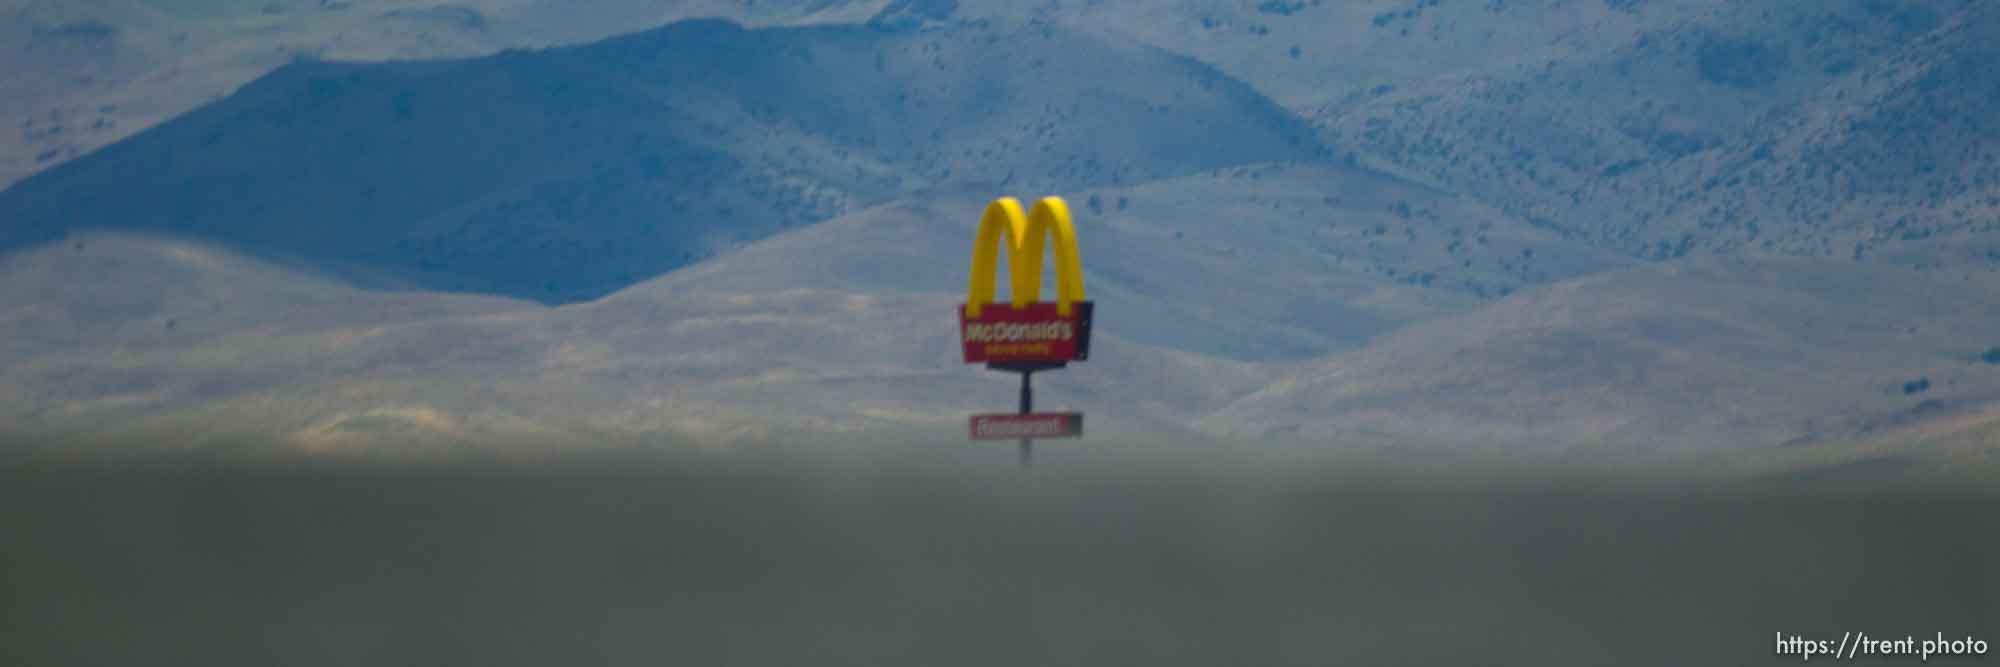 McDonalds through Nevada